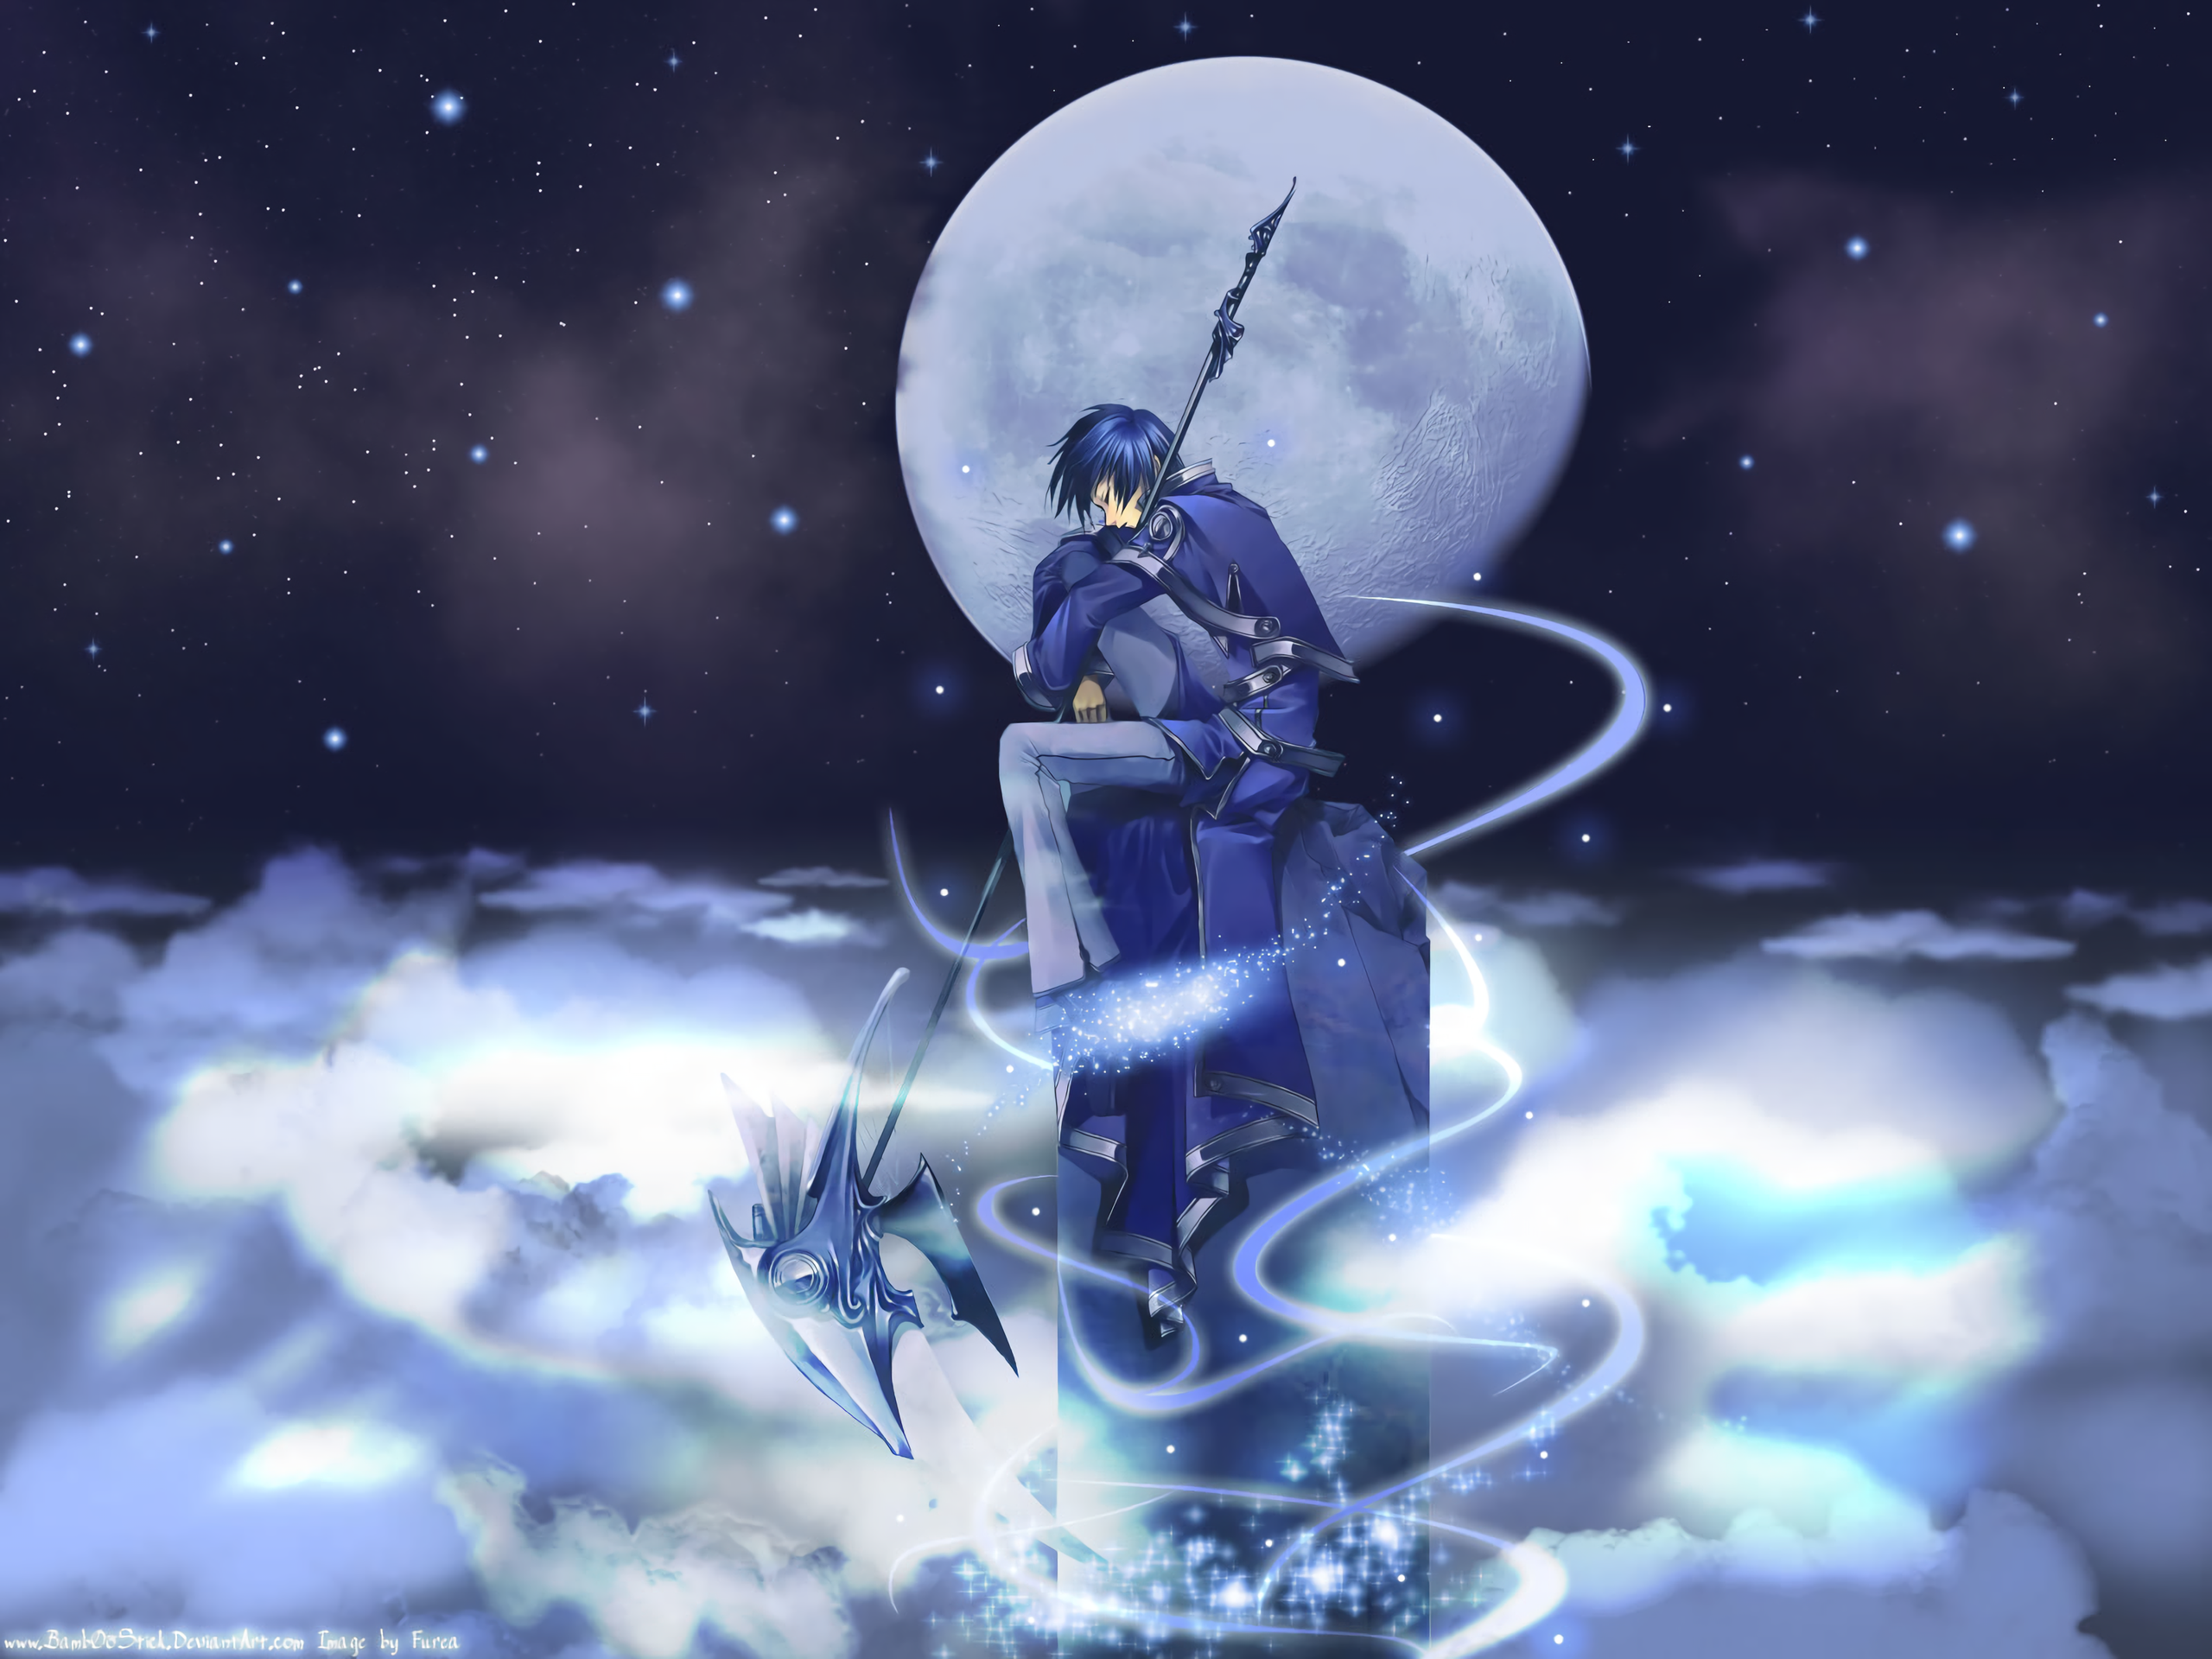 Anime boy standing under a blue moon